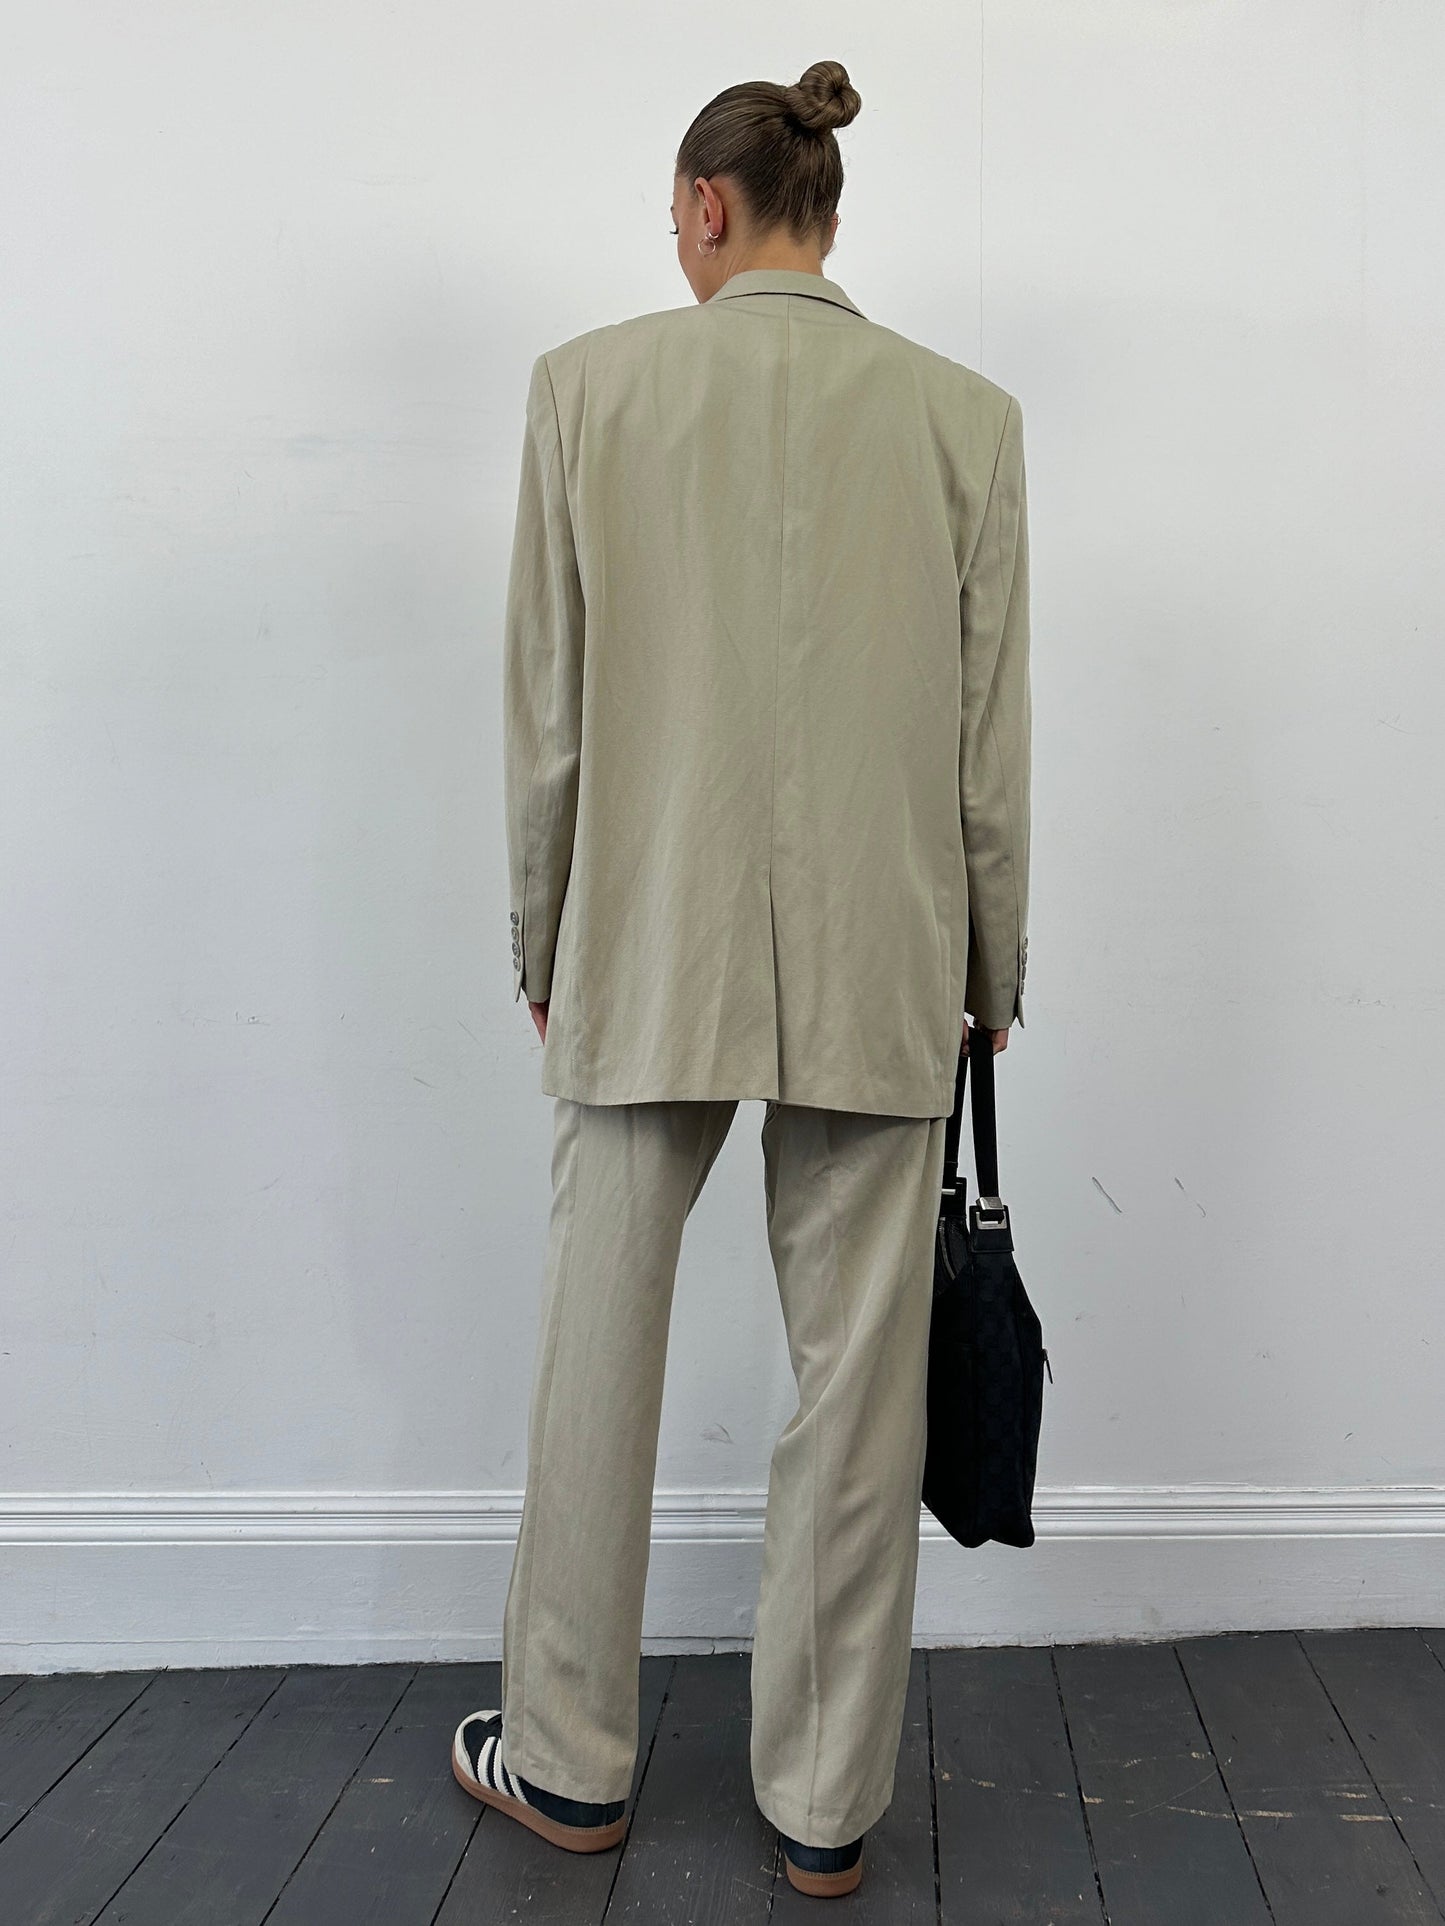 Vintage Linen Blend Single Breasted Suit - 42R/W34